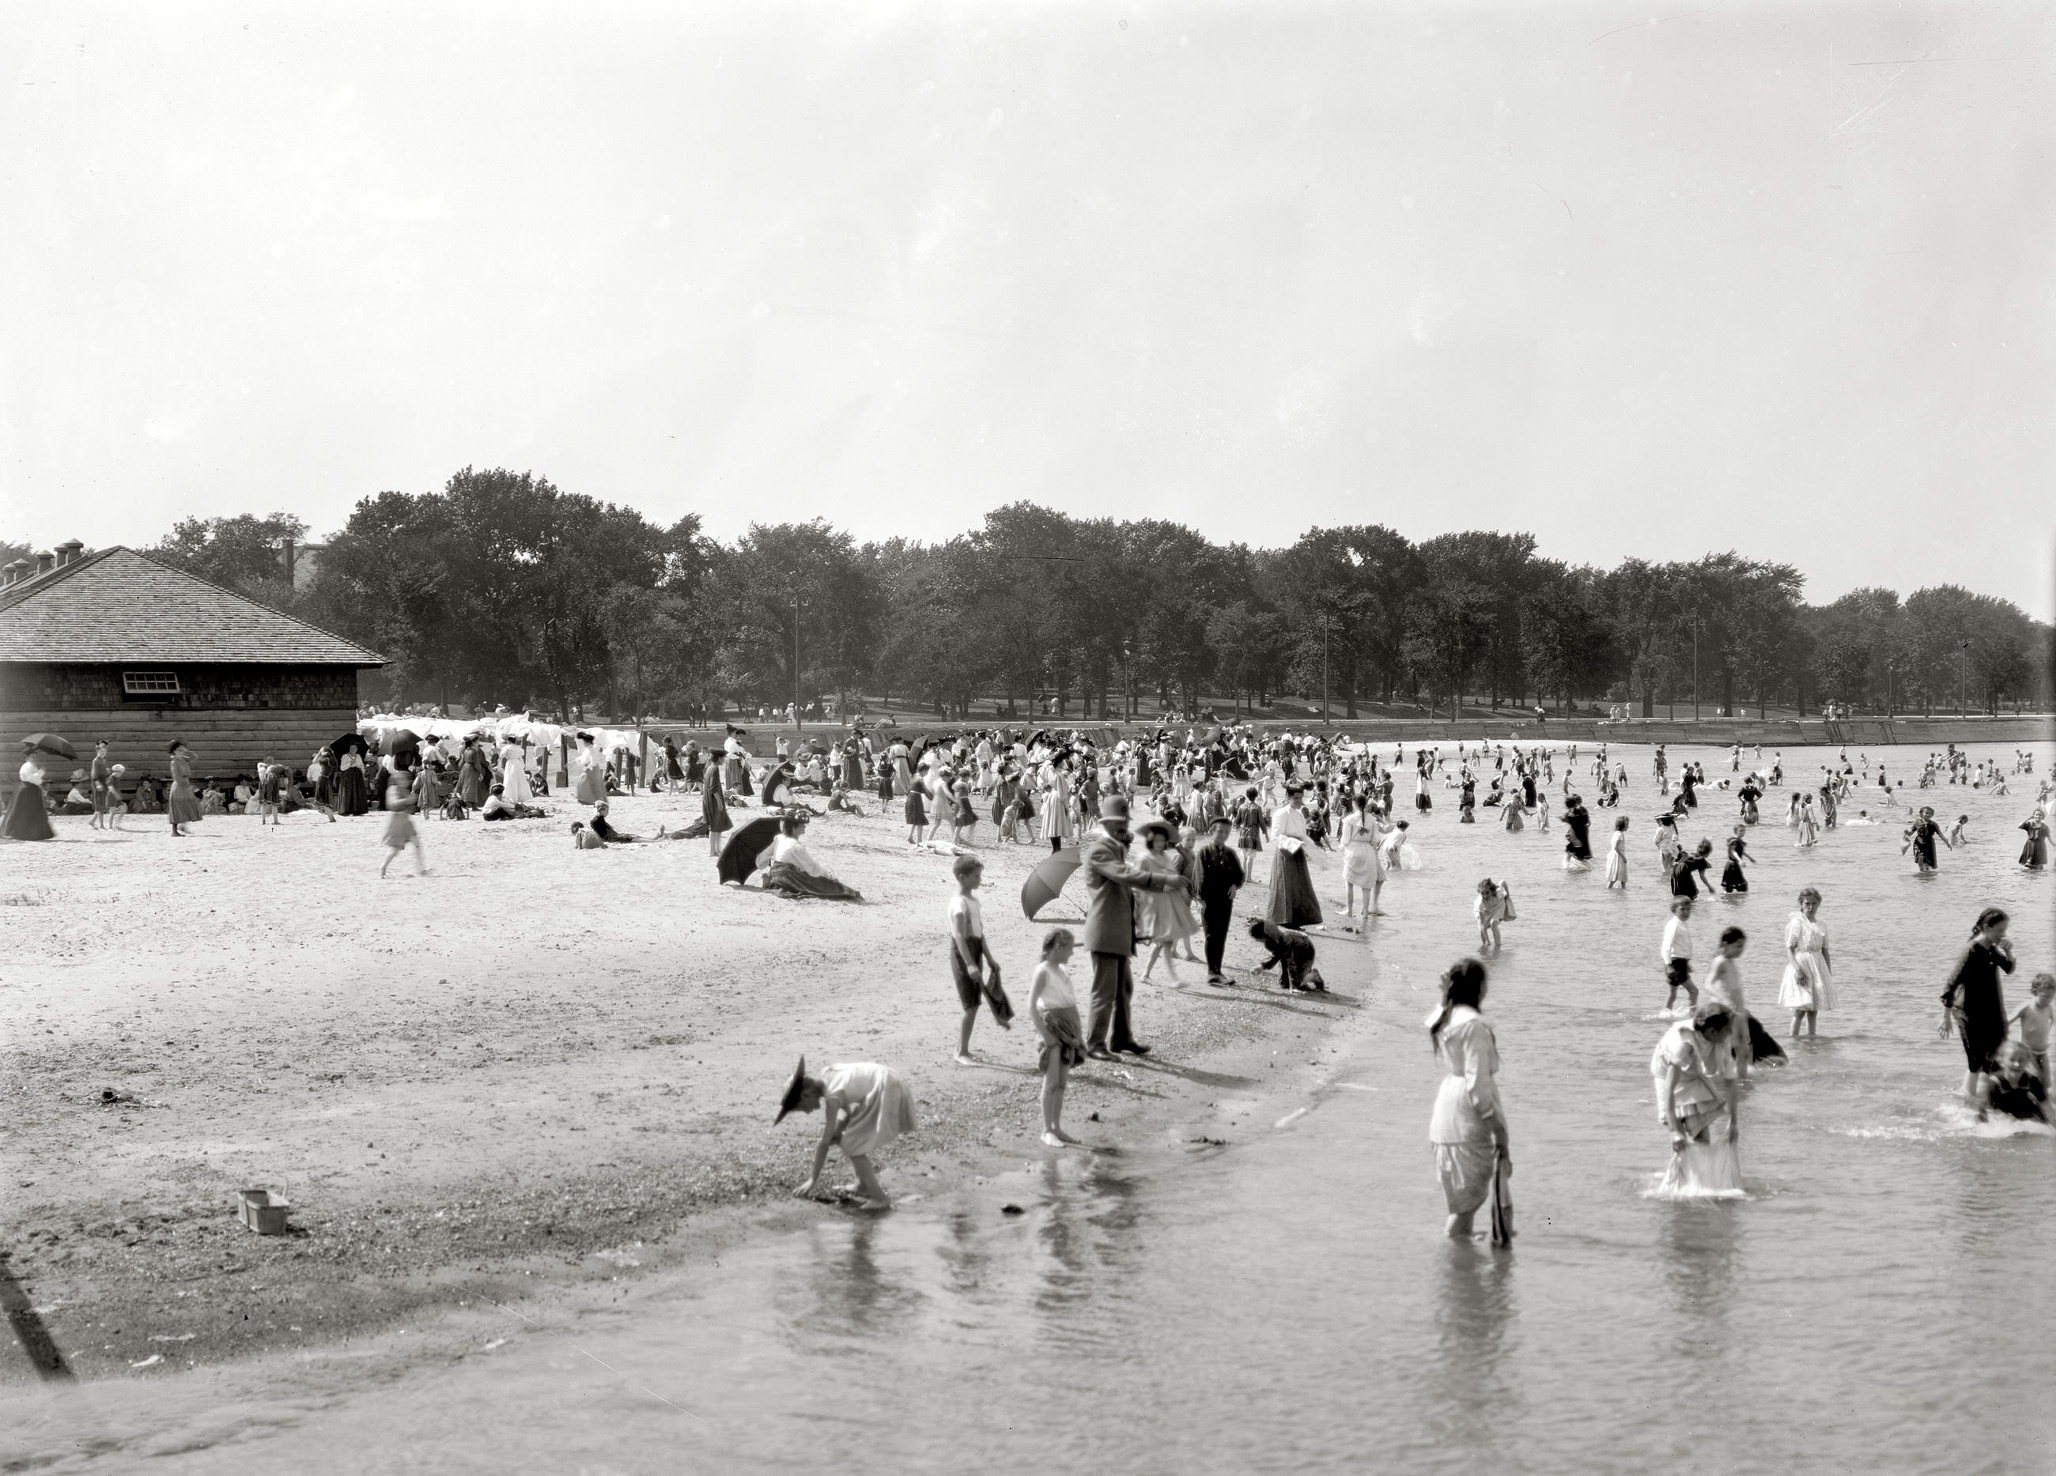 Children's bathing beach, Lincoln Park, Chicago, 1905